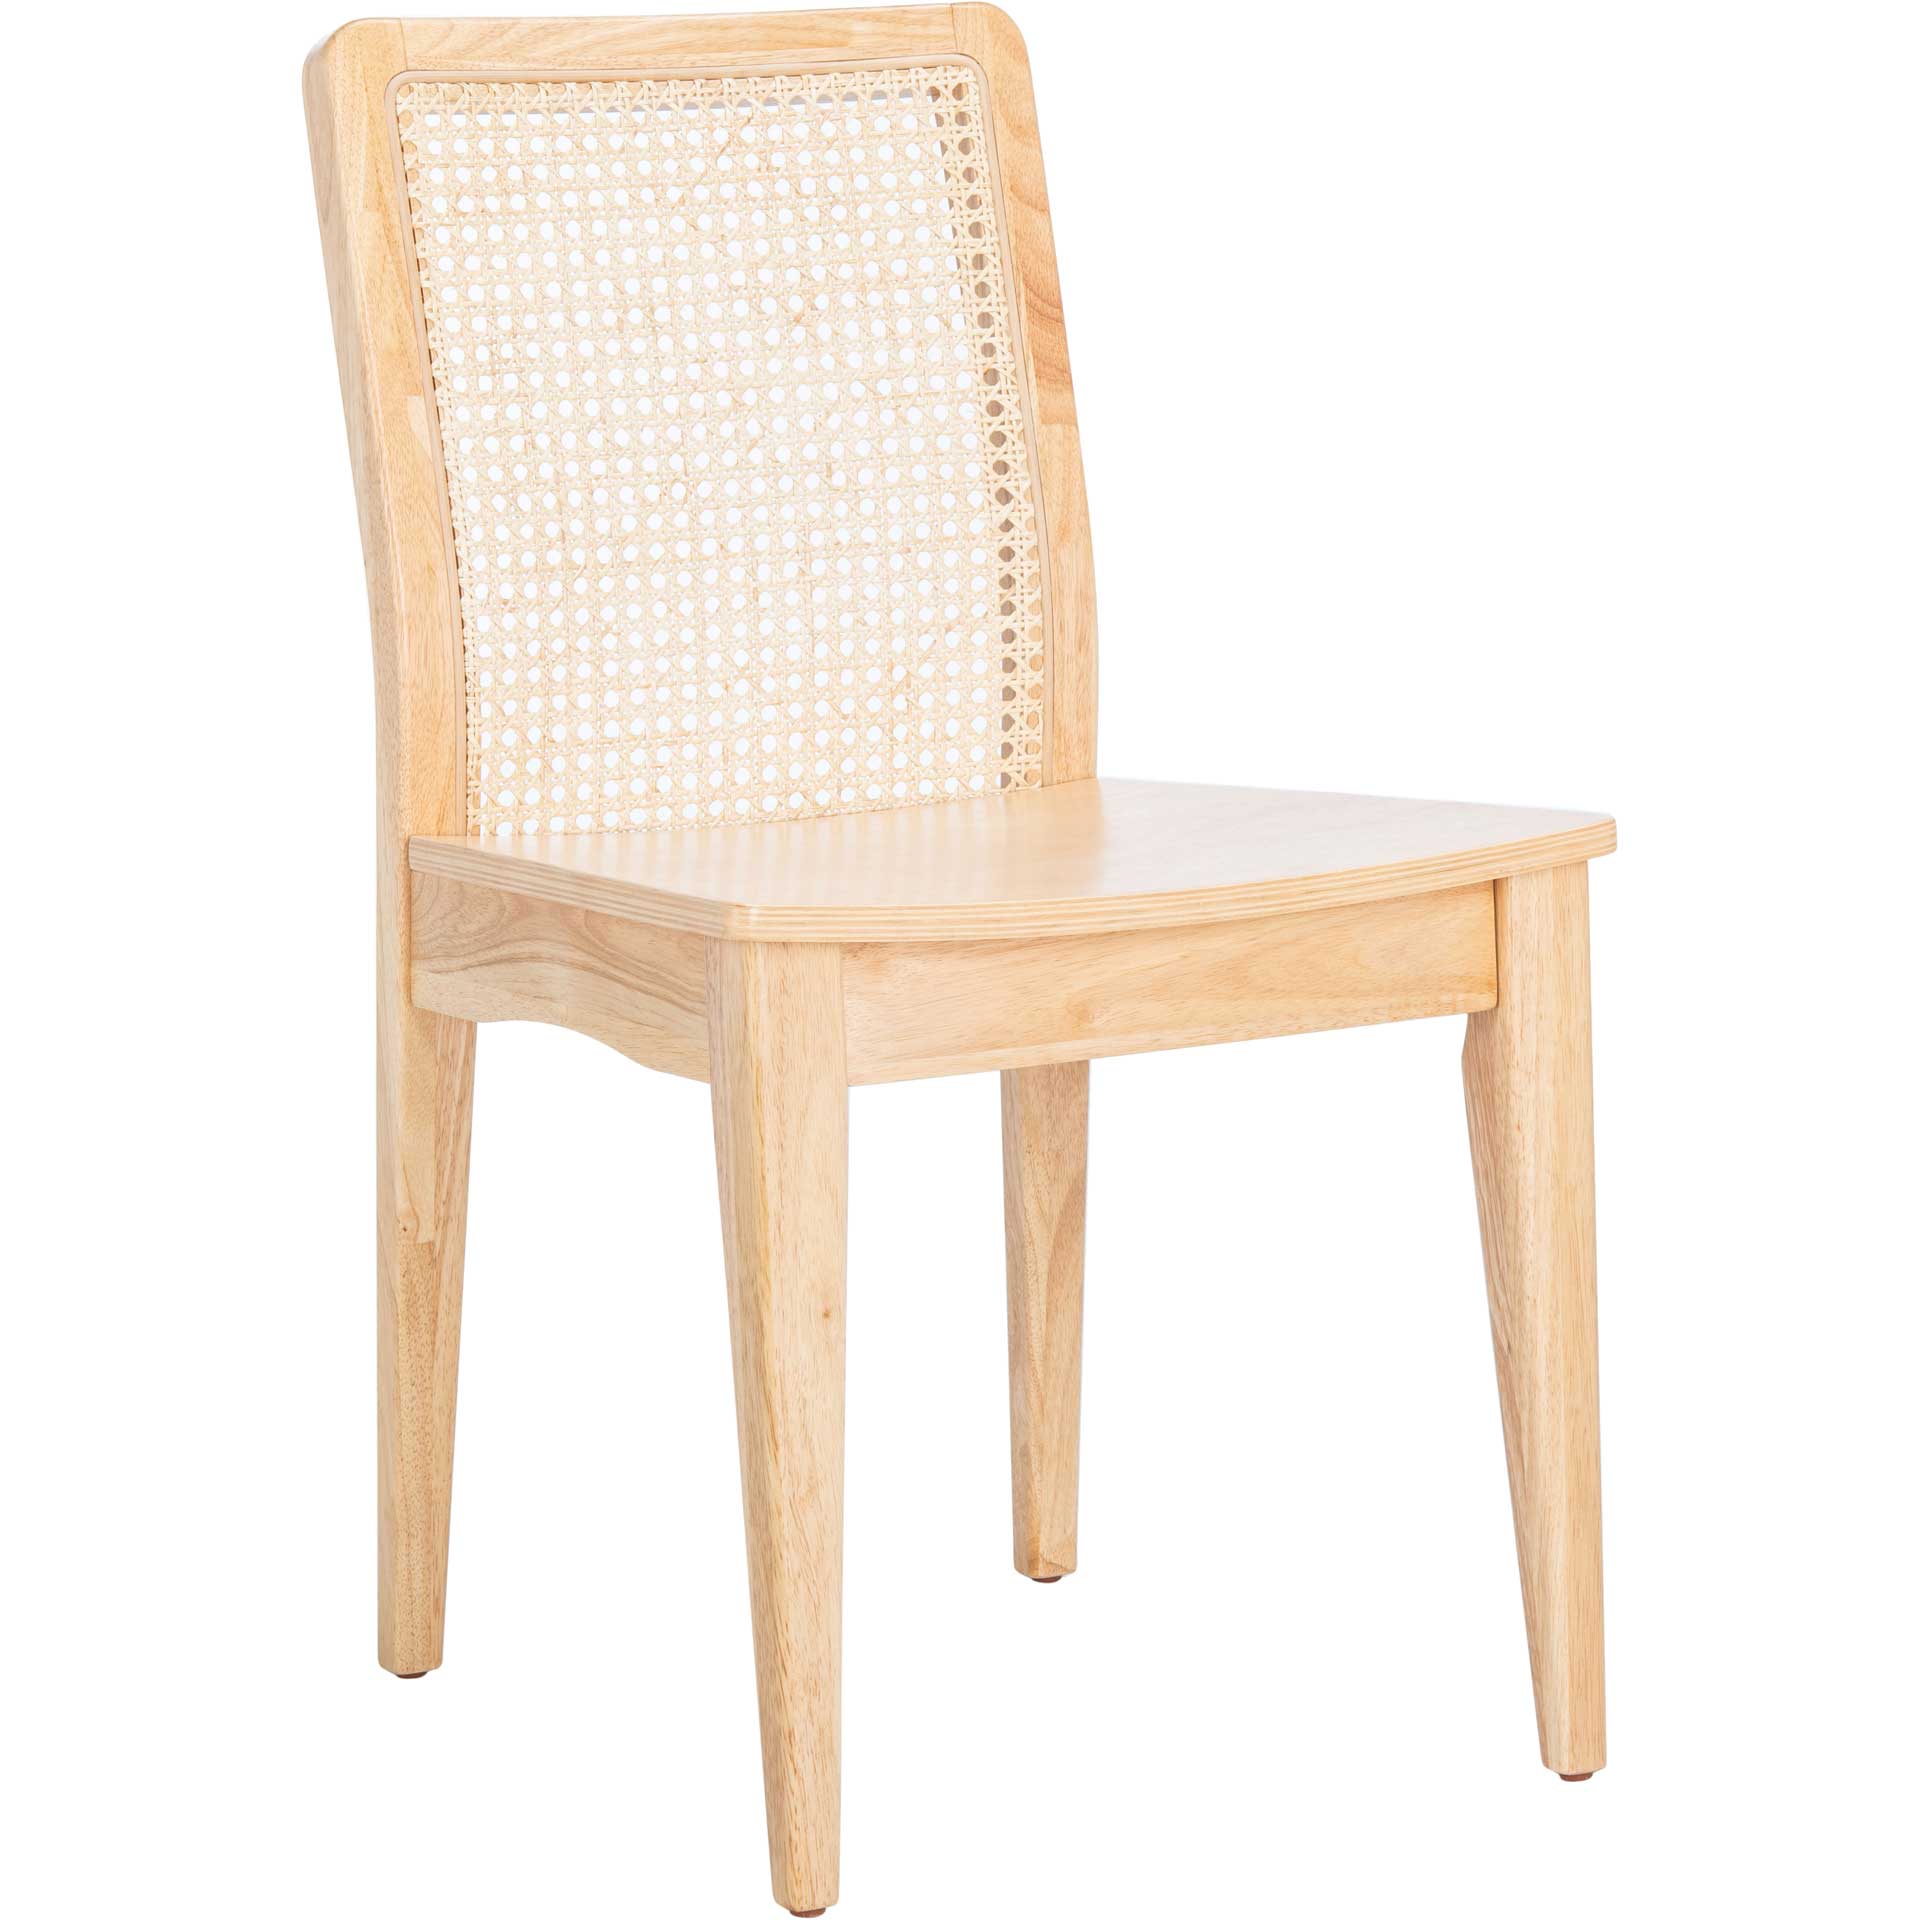 Belomy Rattan Dining Chair Natural/Natural (Set of 2)